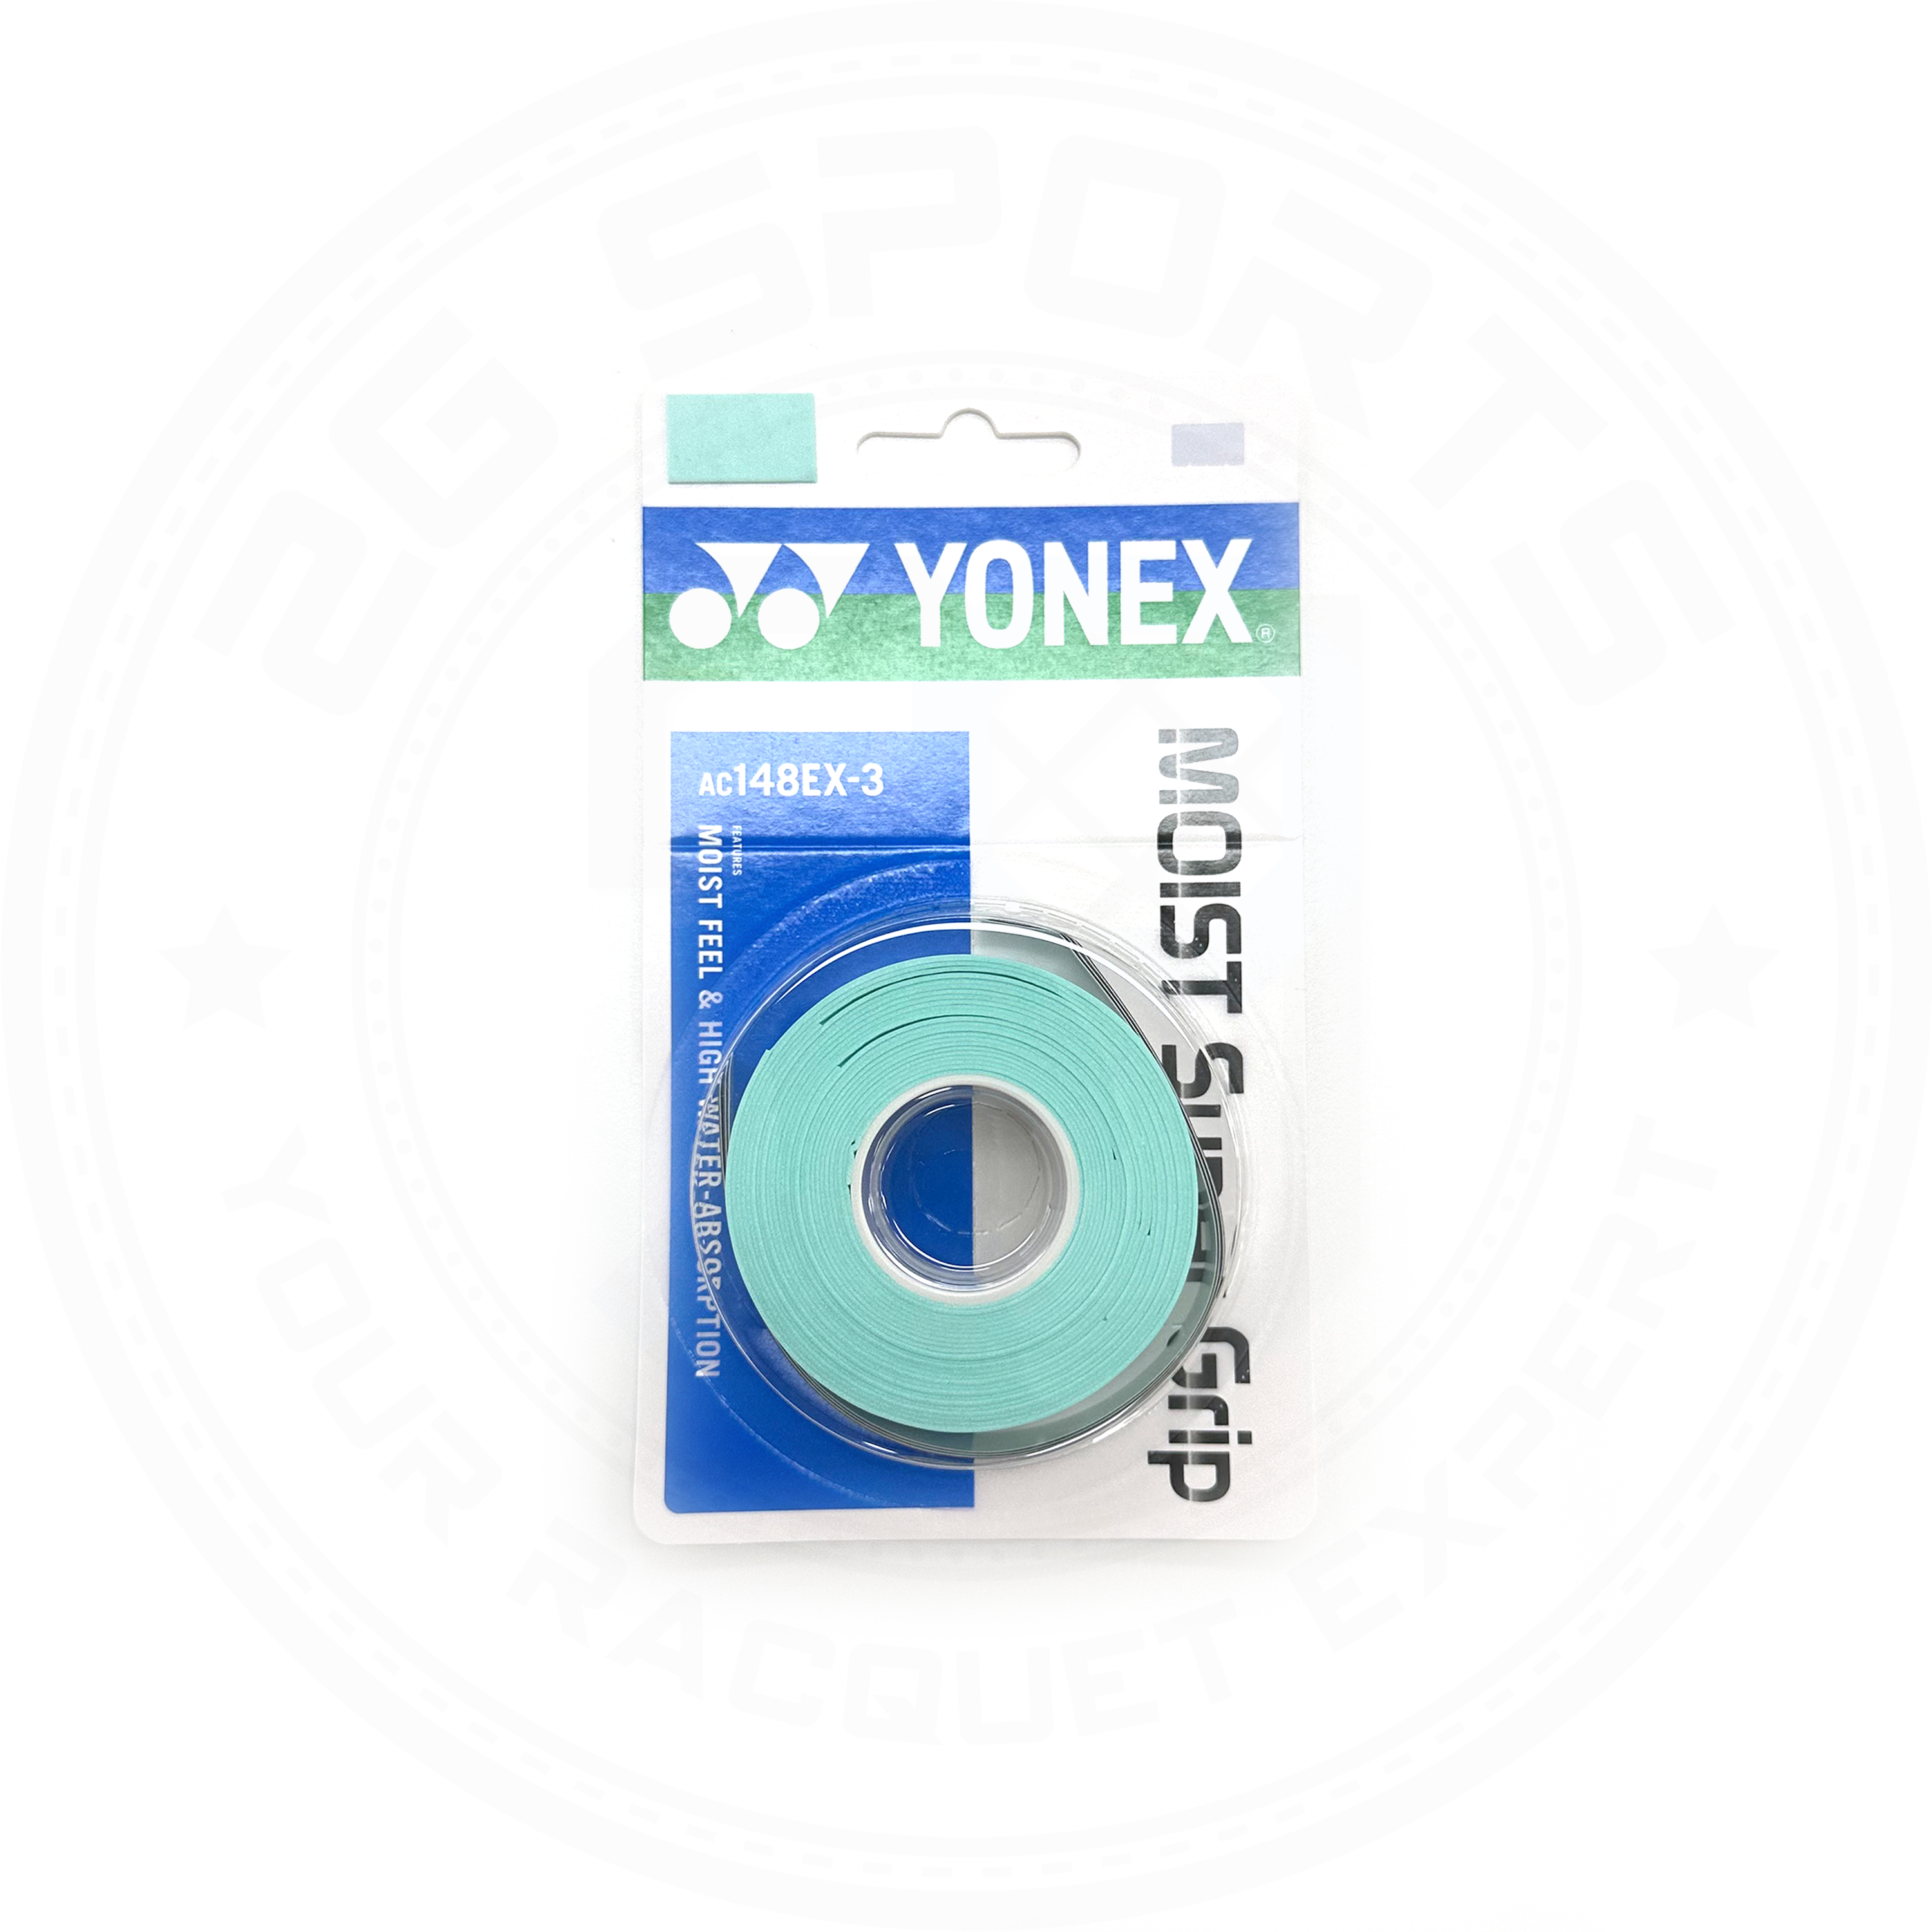 Yonex AC148EX-3 Moist Super Grap (3 wraps)